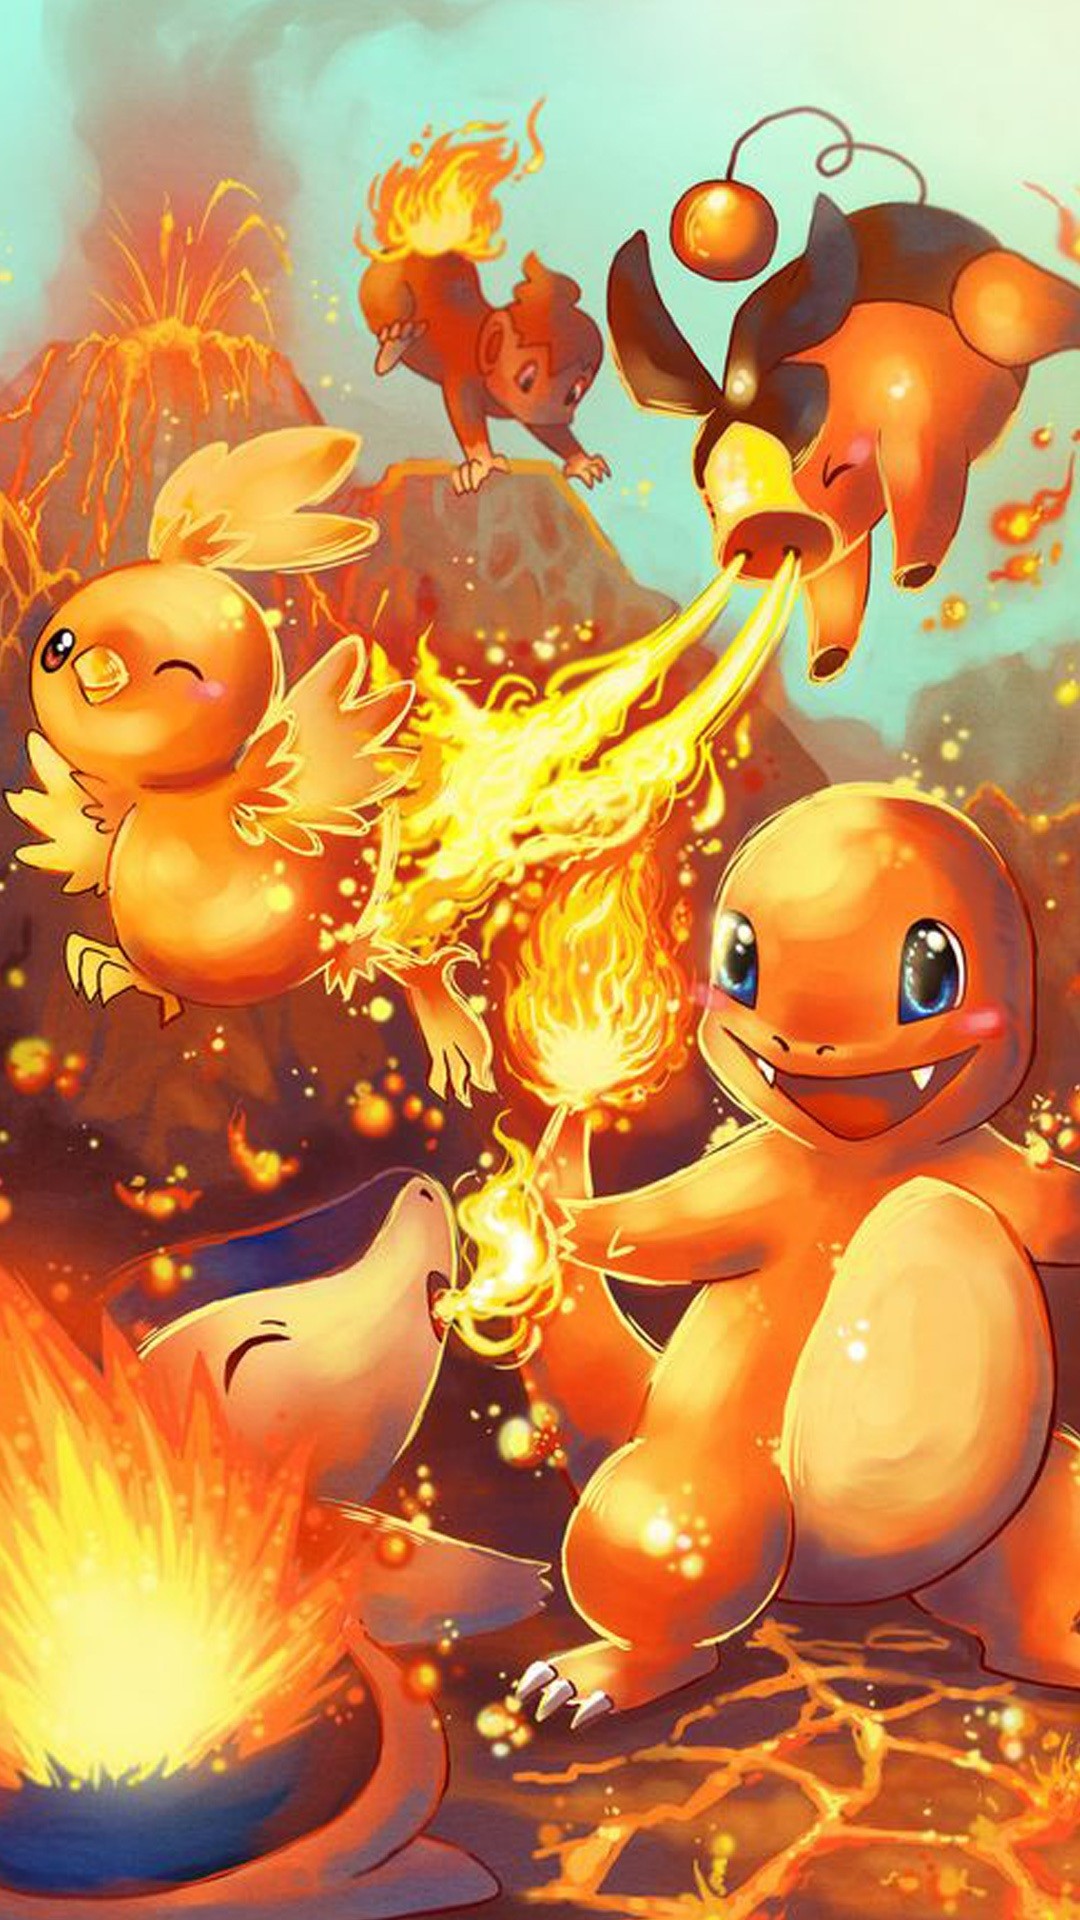 Pokemon Go Charmander fire characters Iphone hd wallpaper